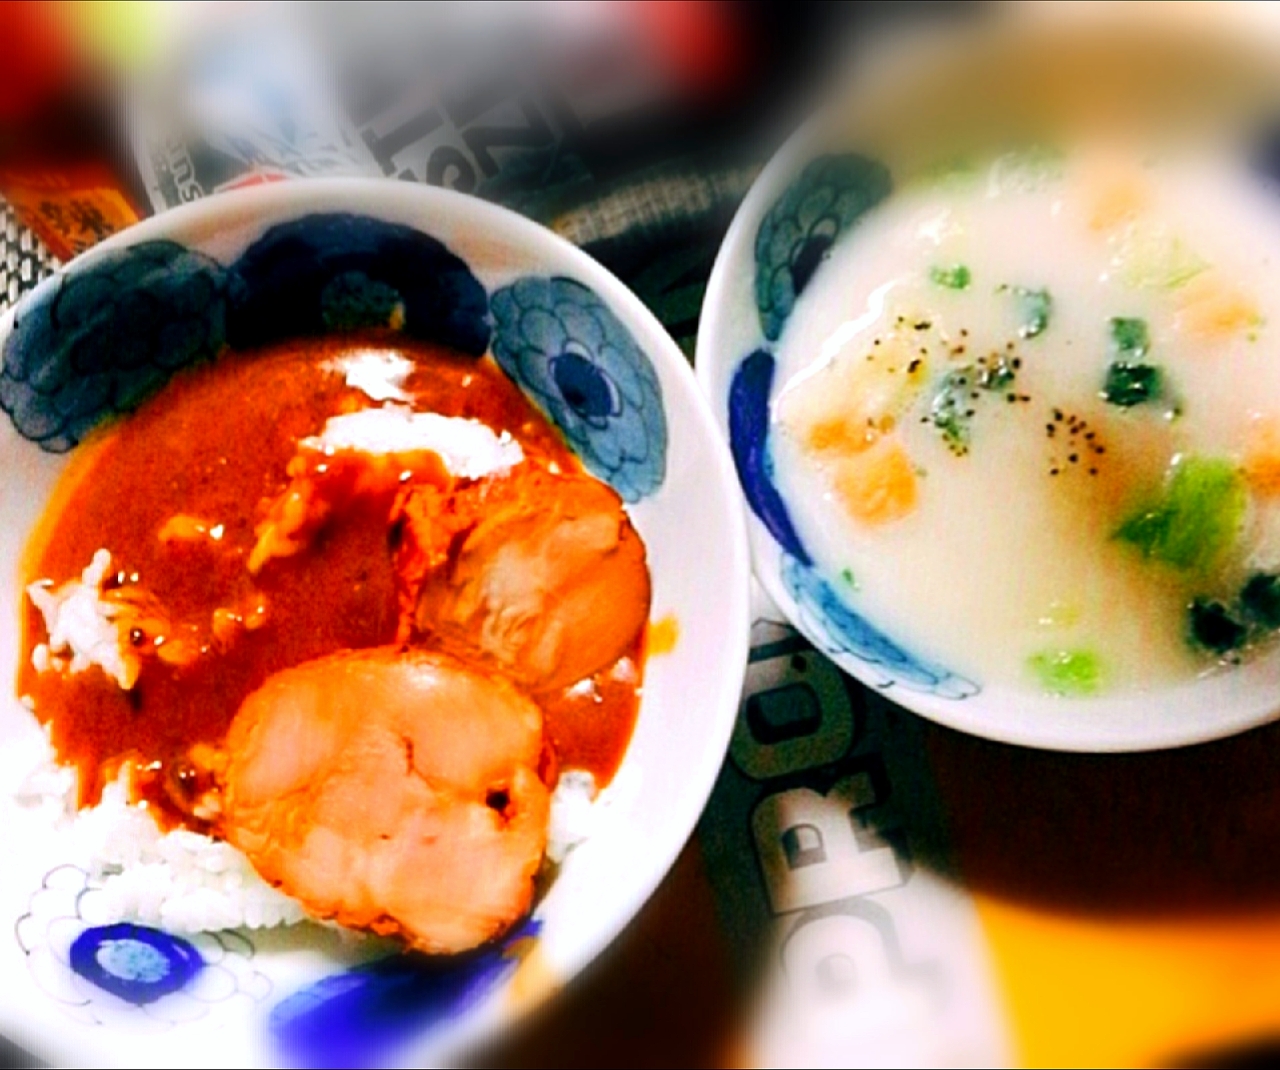 Today's lunch〜焼豚カレーとクリームシチュー👍🥃カンパーイ🎶🥃